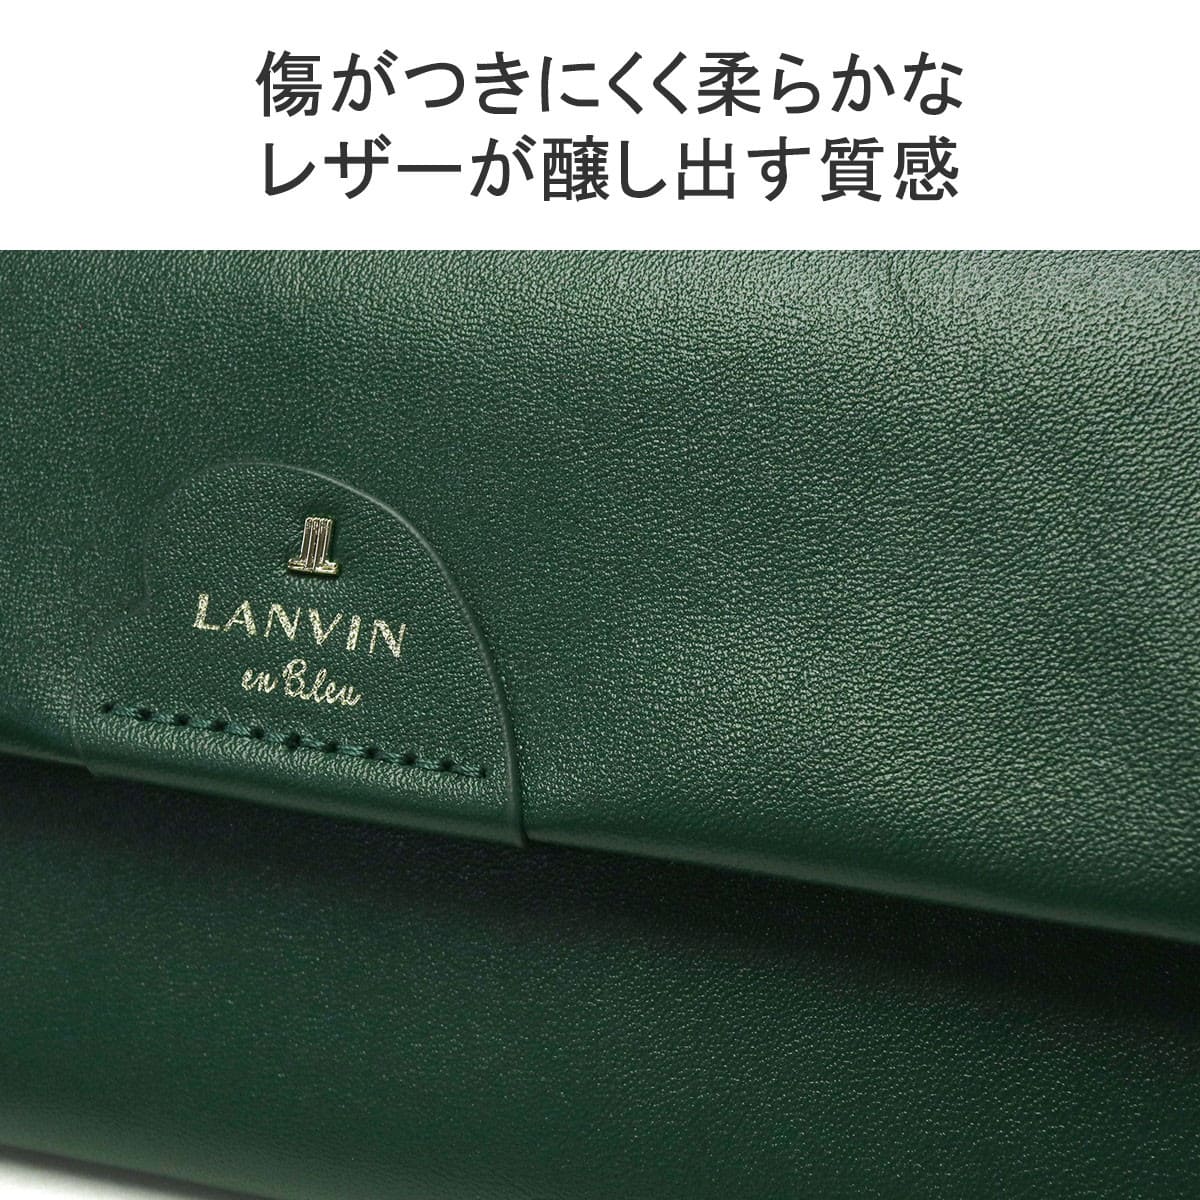 LANVIN en Bleu ランバンオンブルー ルイーズ 財布 484120｜【正規販売